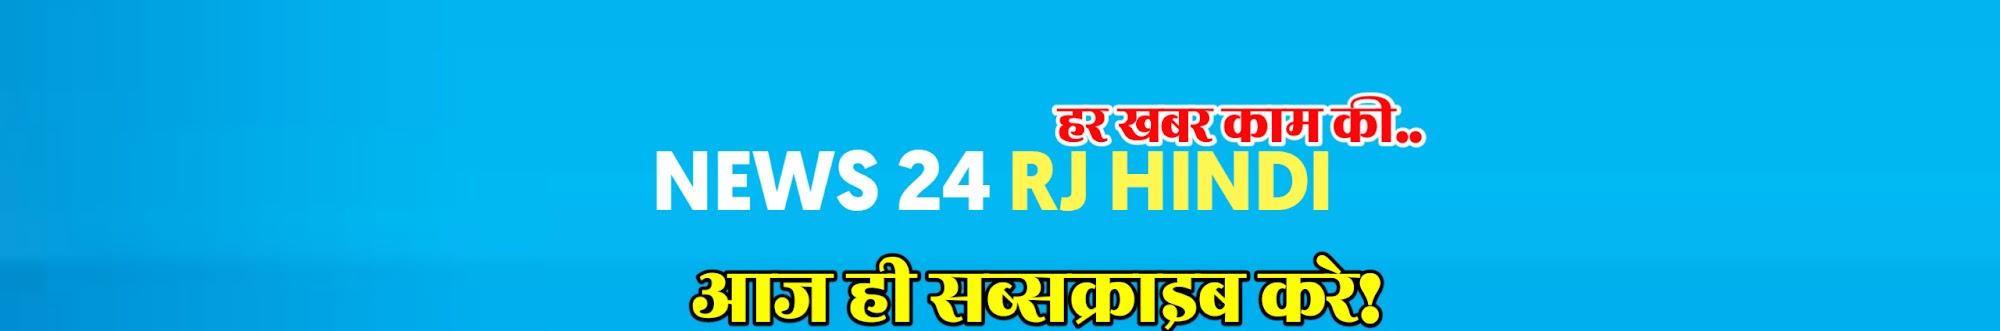 News 24 Rj Hindi